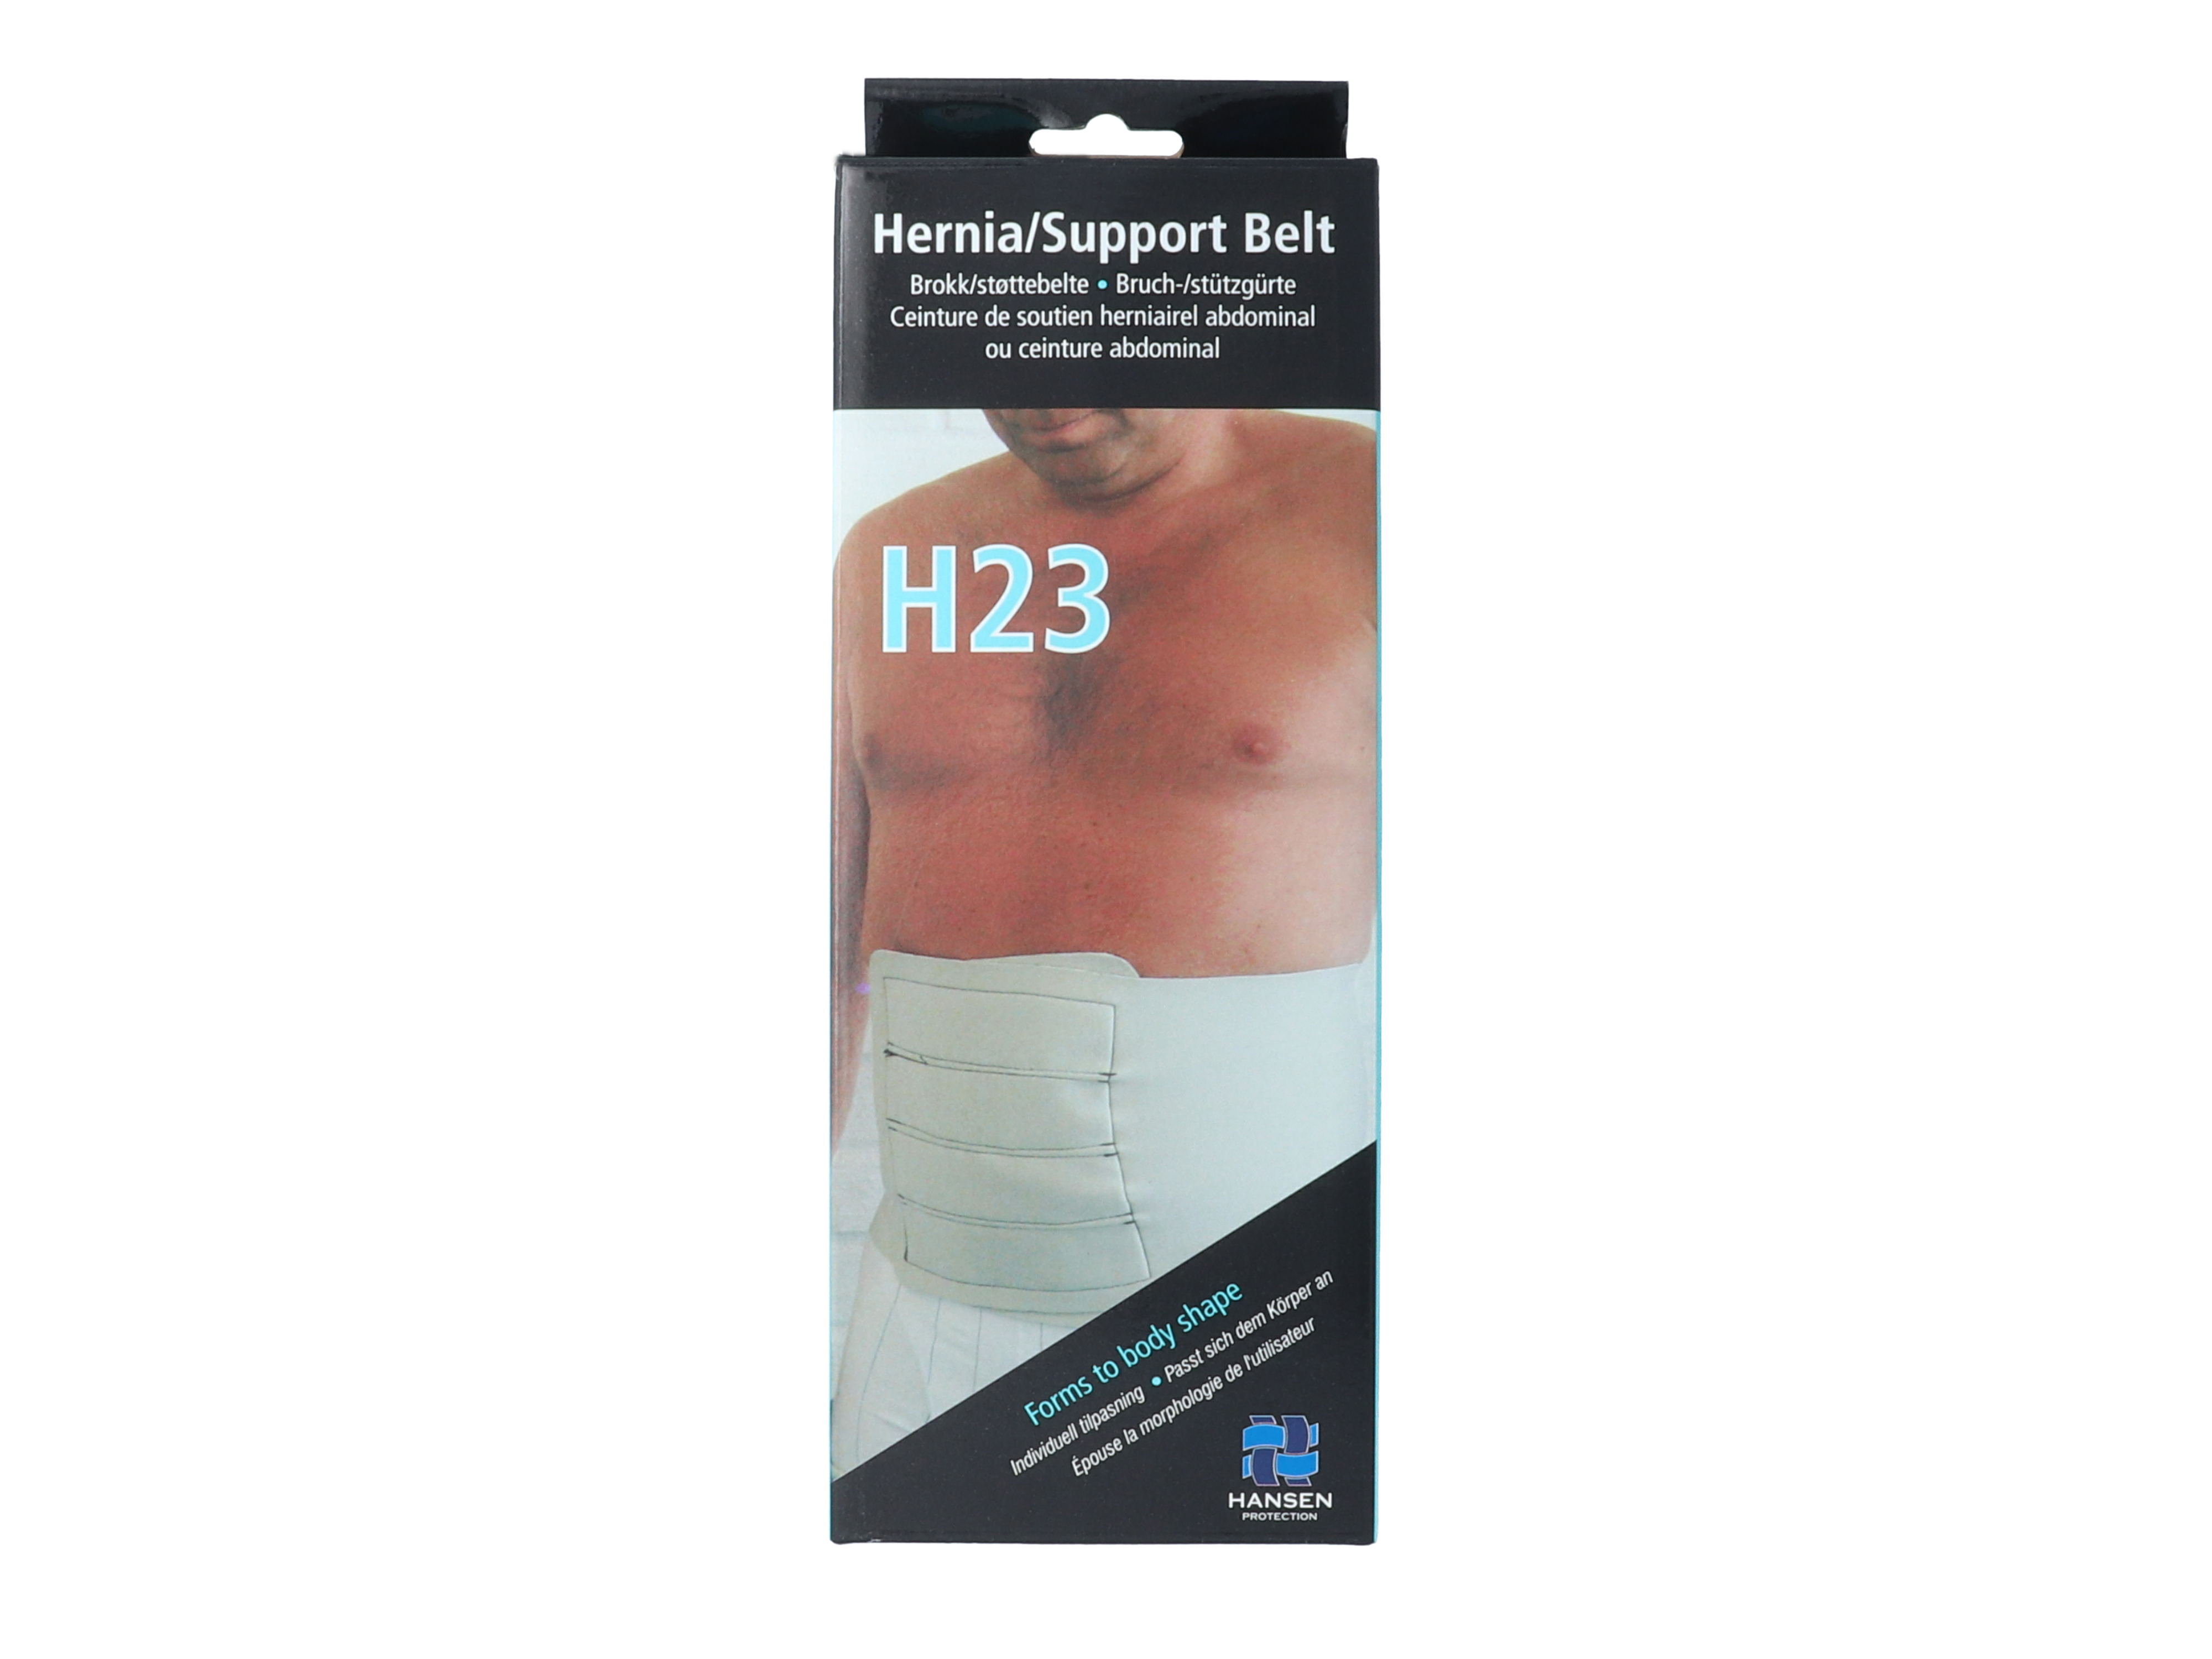 Hansen Protection HH Brokk/støttebelte H23, str XXL, omkrets 120 cm, 1 stk.